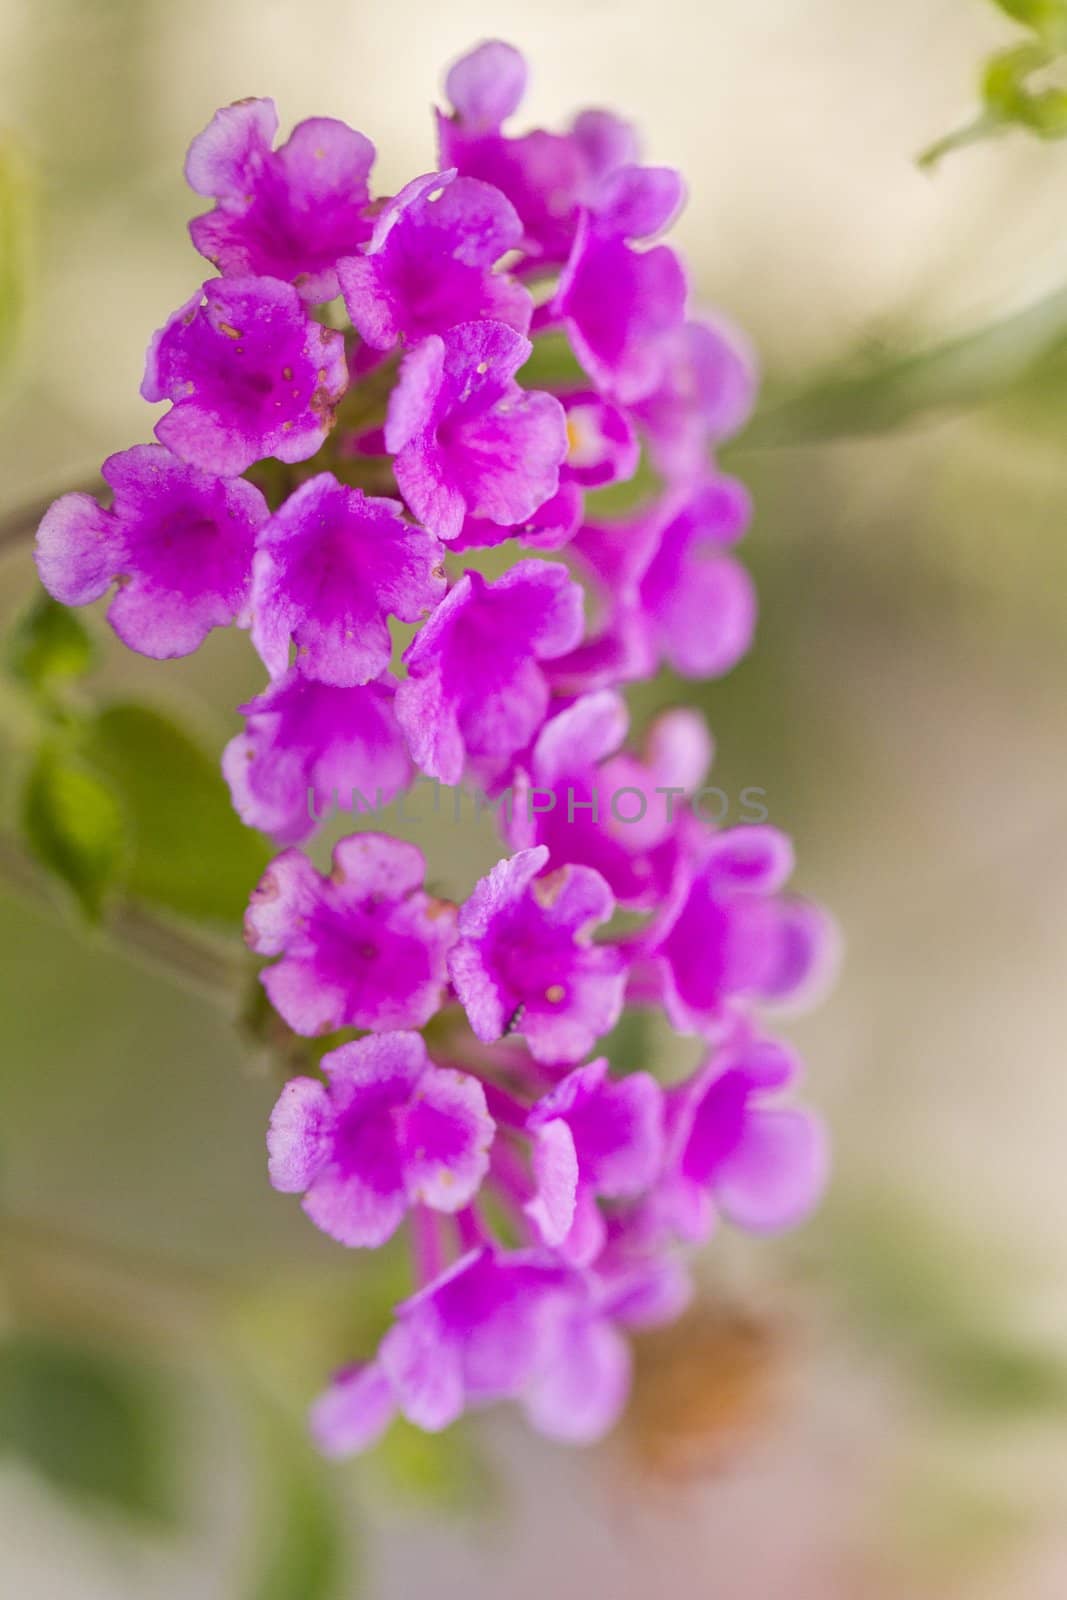 Close up view of the beautiful purple lantana camara flower.